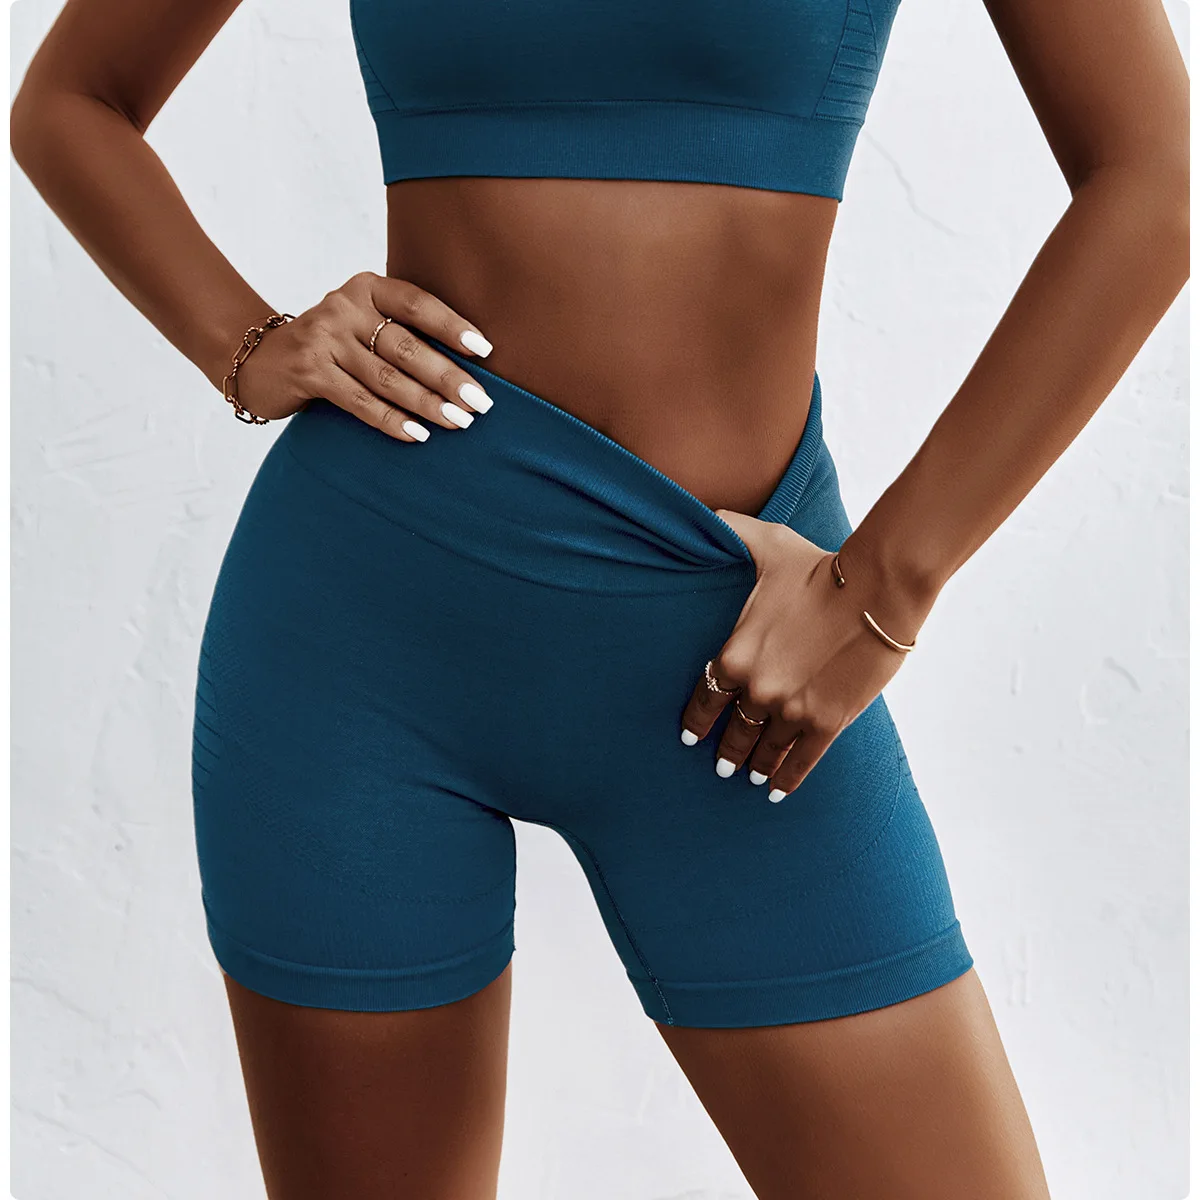 YIYI Seamless Knitted High Waist Gym Shorts Women Tummy Control Fashion Athletic Shorts Ladies Sports Fitness Yoga Shorts